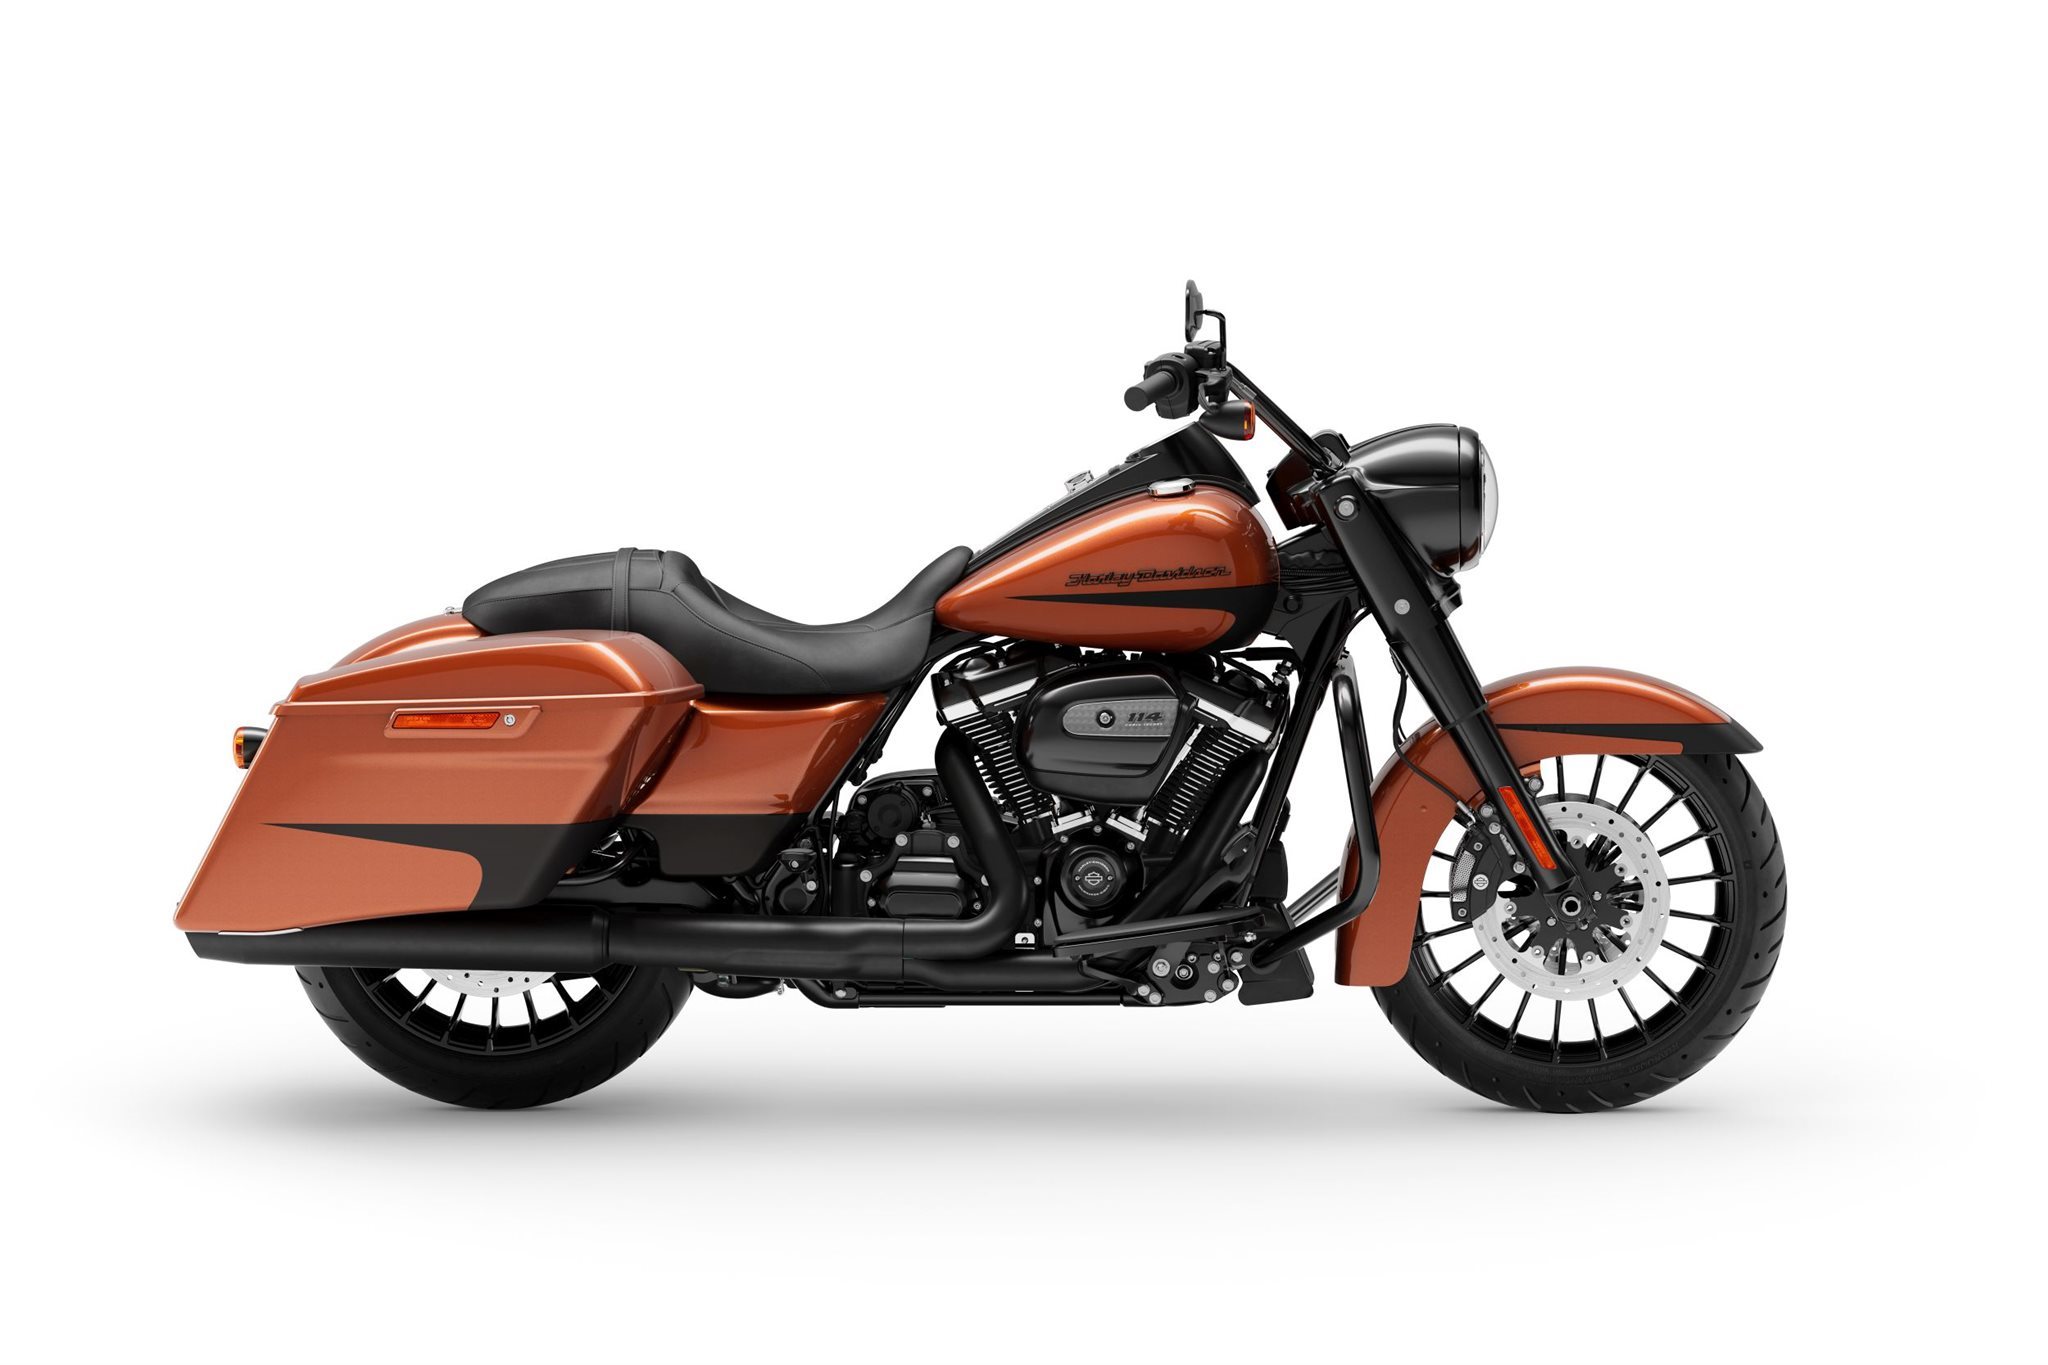 Motorrad Vergleich Harley Davidson Touring Street Glide Special Flhxs 2020 Vs Harley Davidson Touring Road King Special Flhrxs 2020